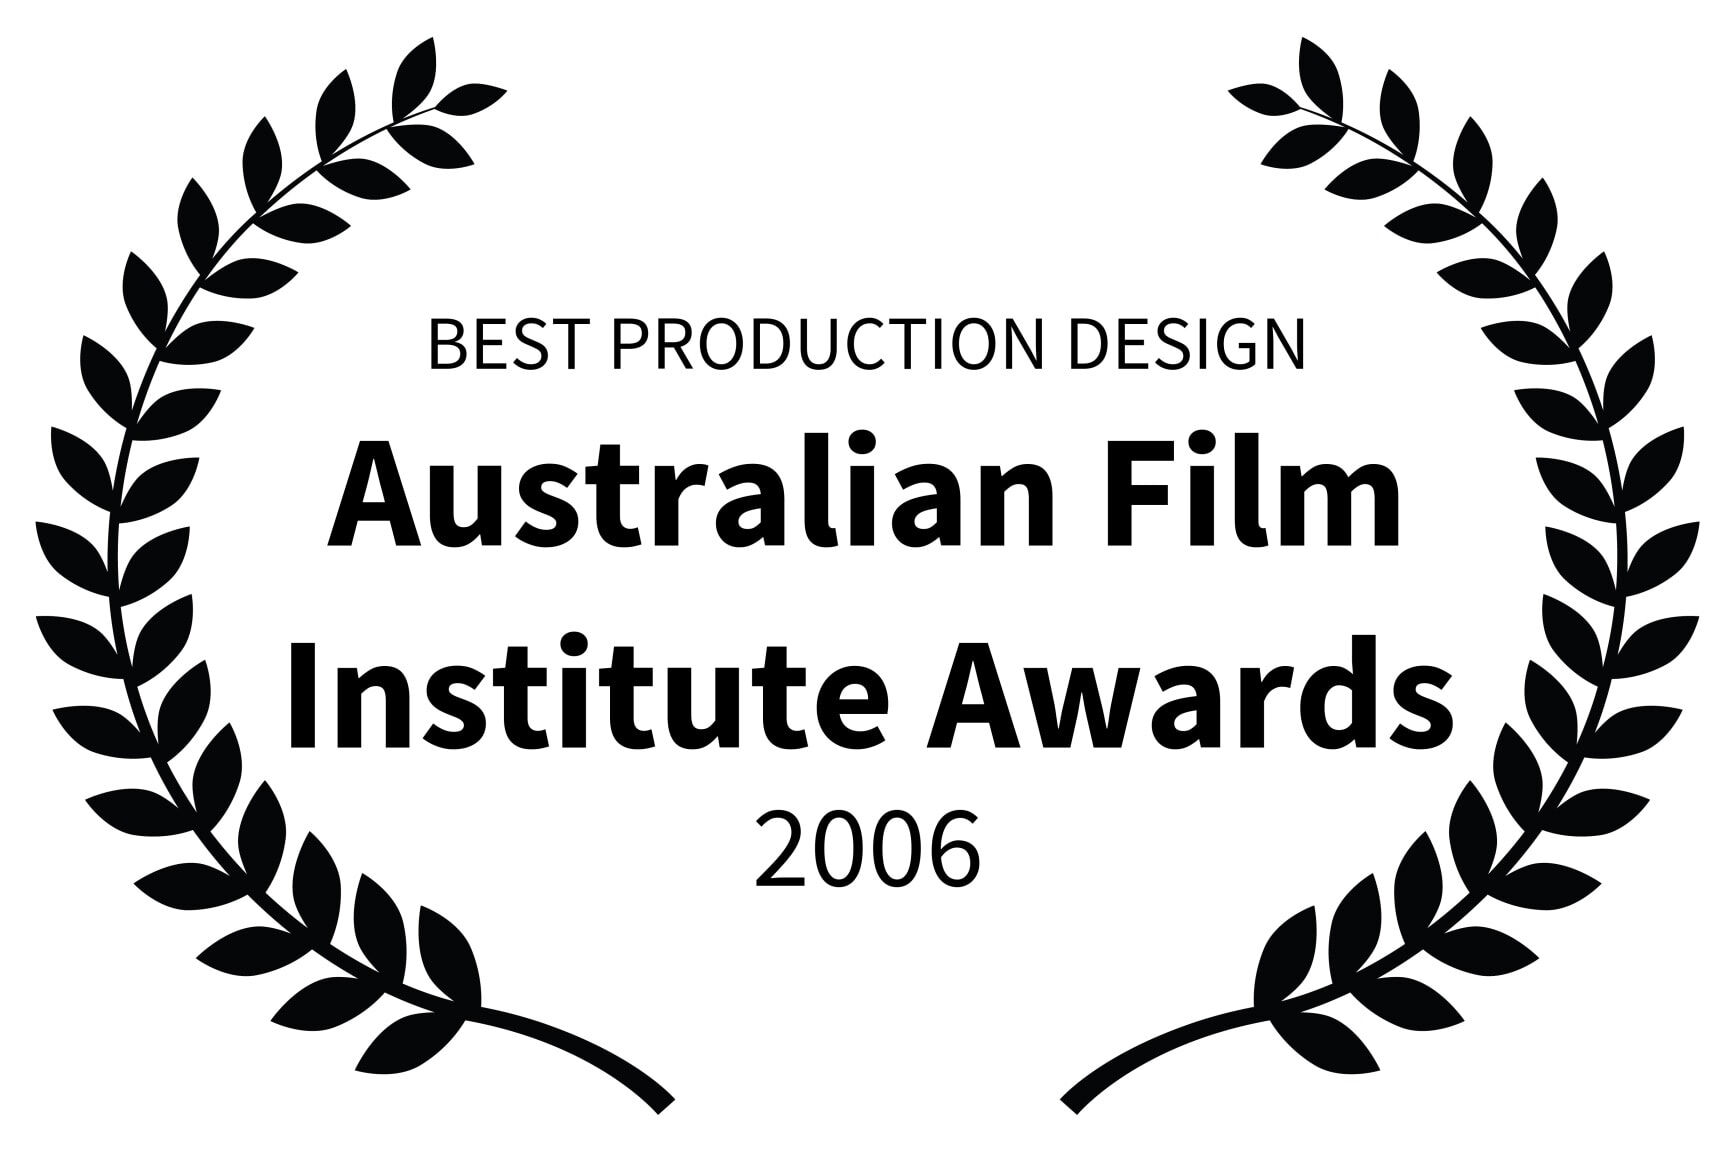 BEST PRODUCTION DESIGN - Australian Film Institute Awards - 2006